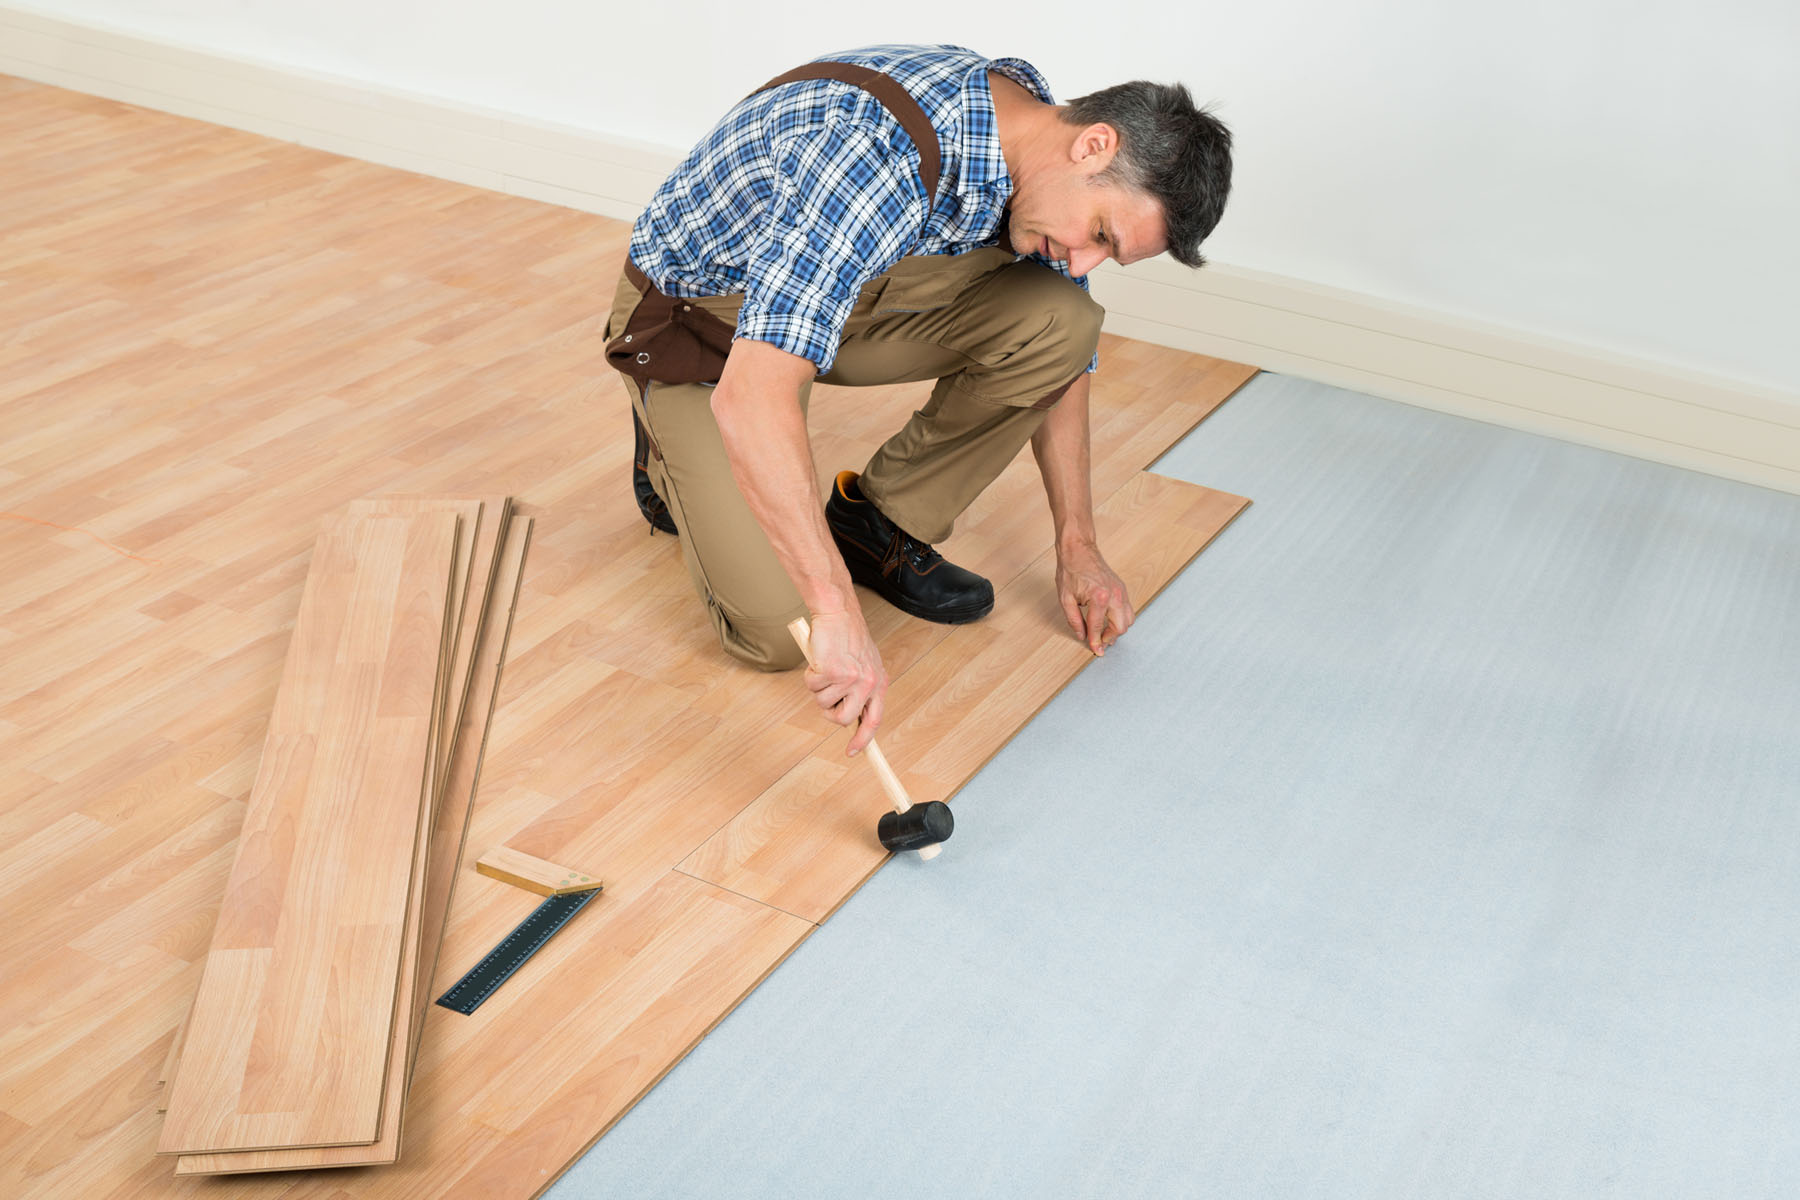 Flooring Installer How To Enter The Job